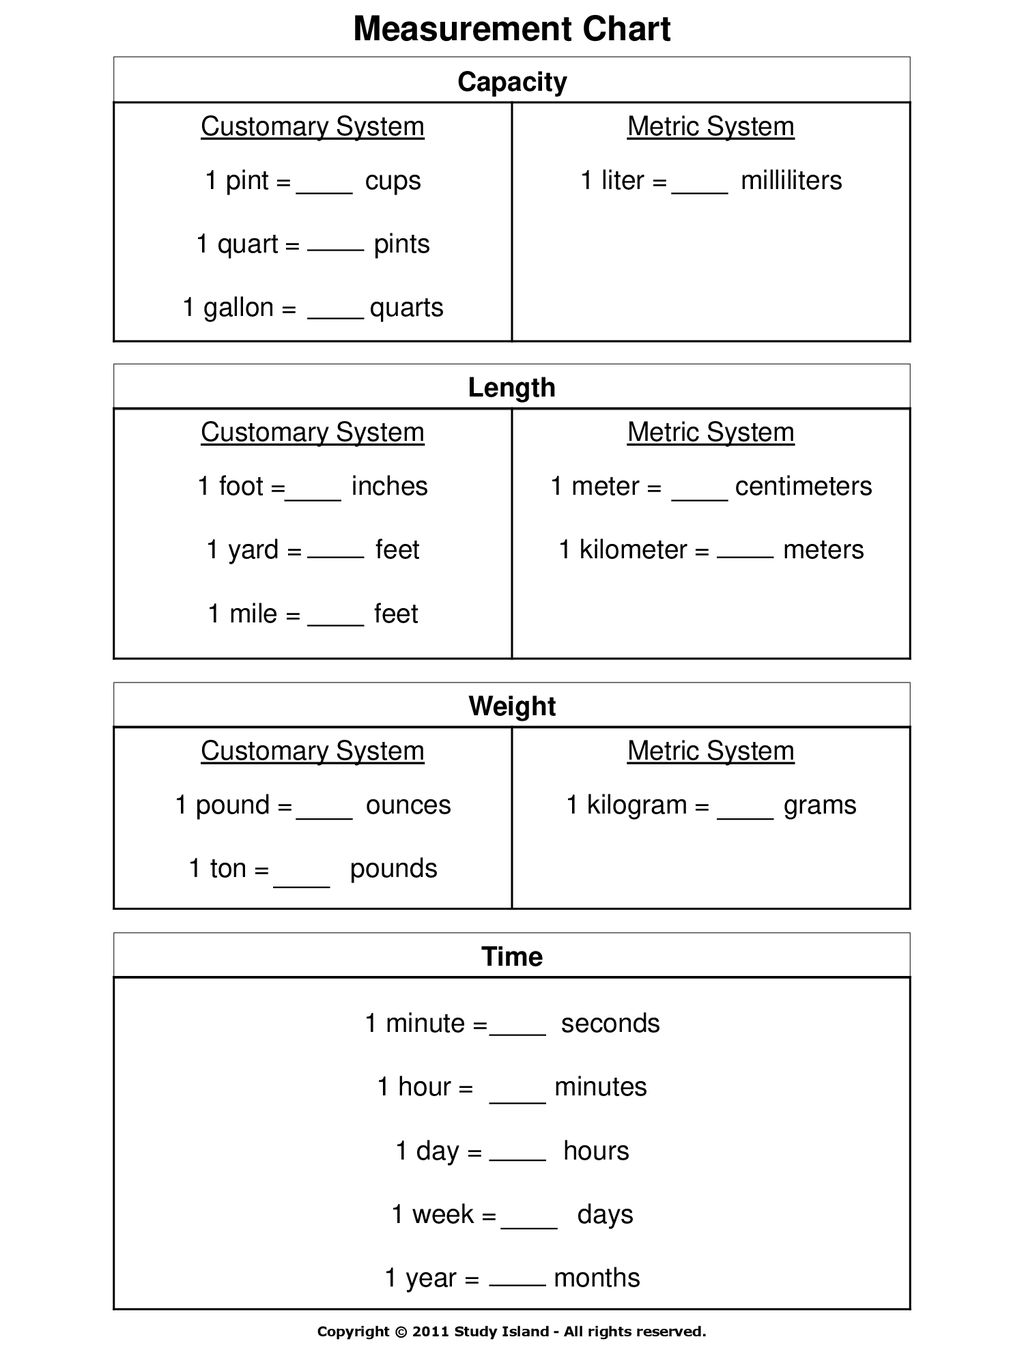 Measurement Chart Liters